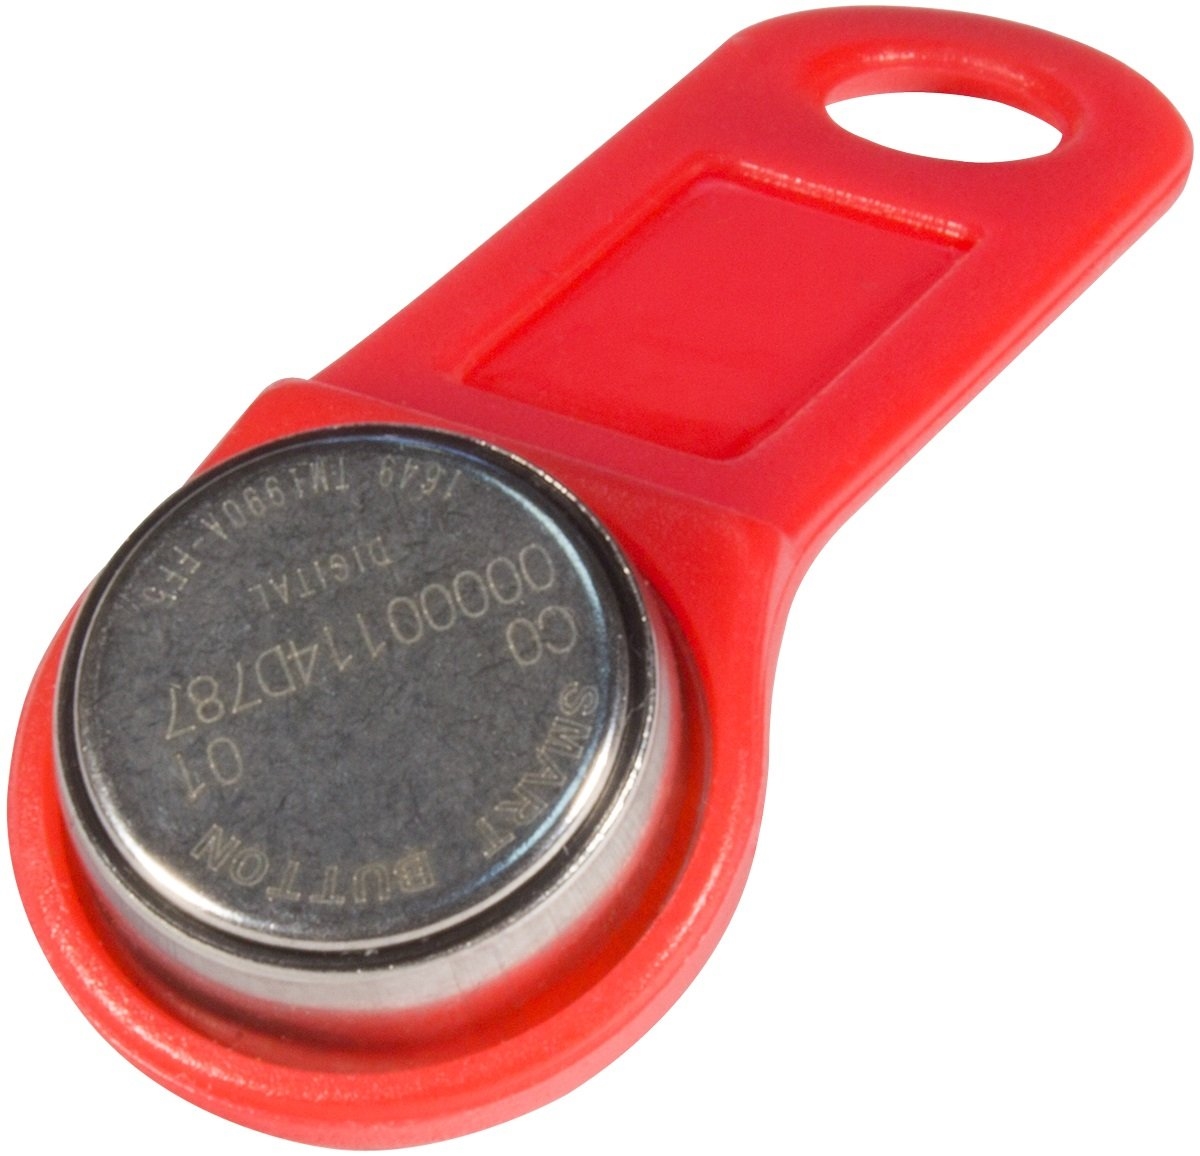 Ключ SB 1990 A TouchMemory (красный): Ключ электронный Touch Memory с держателем